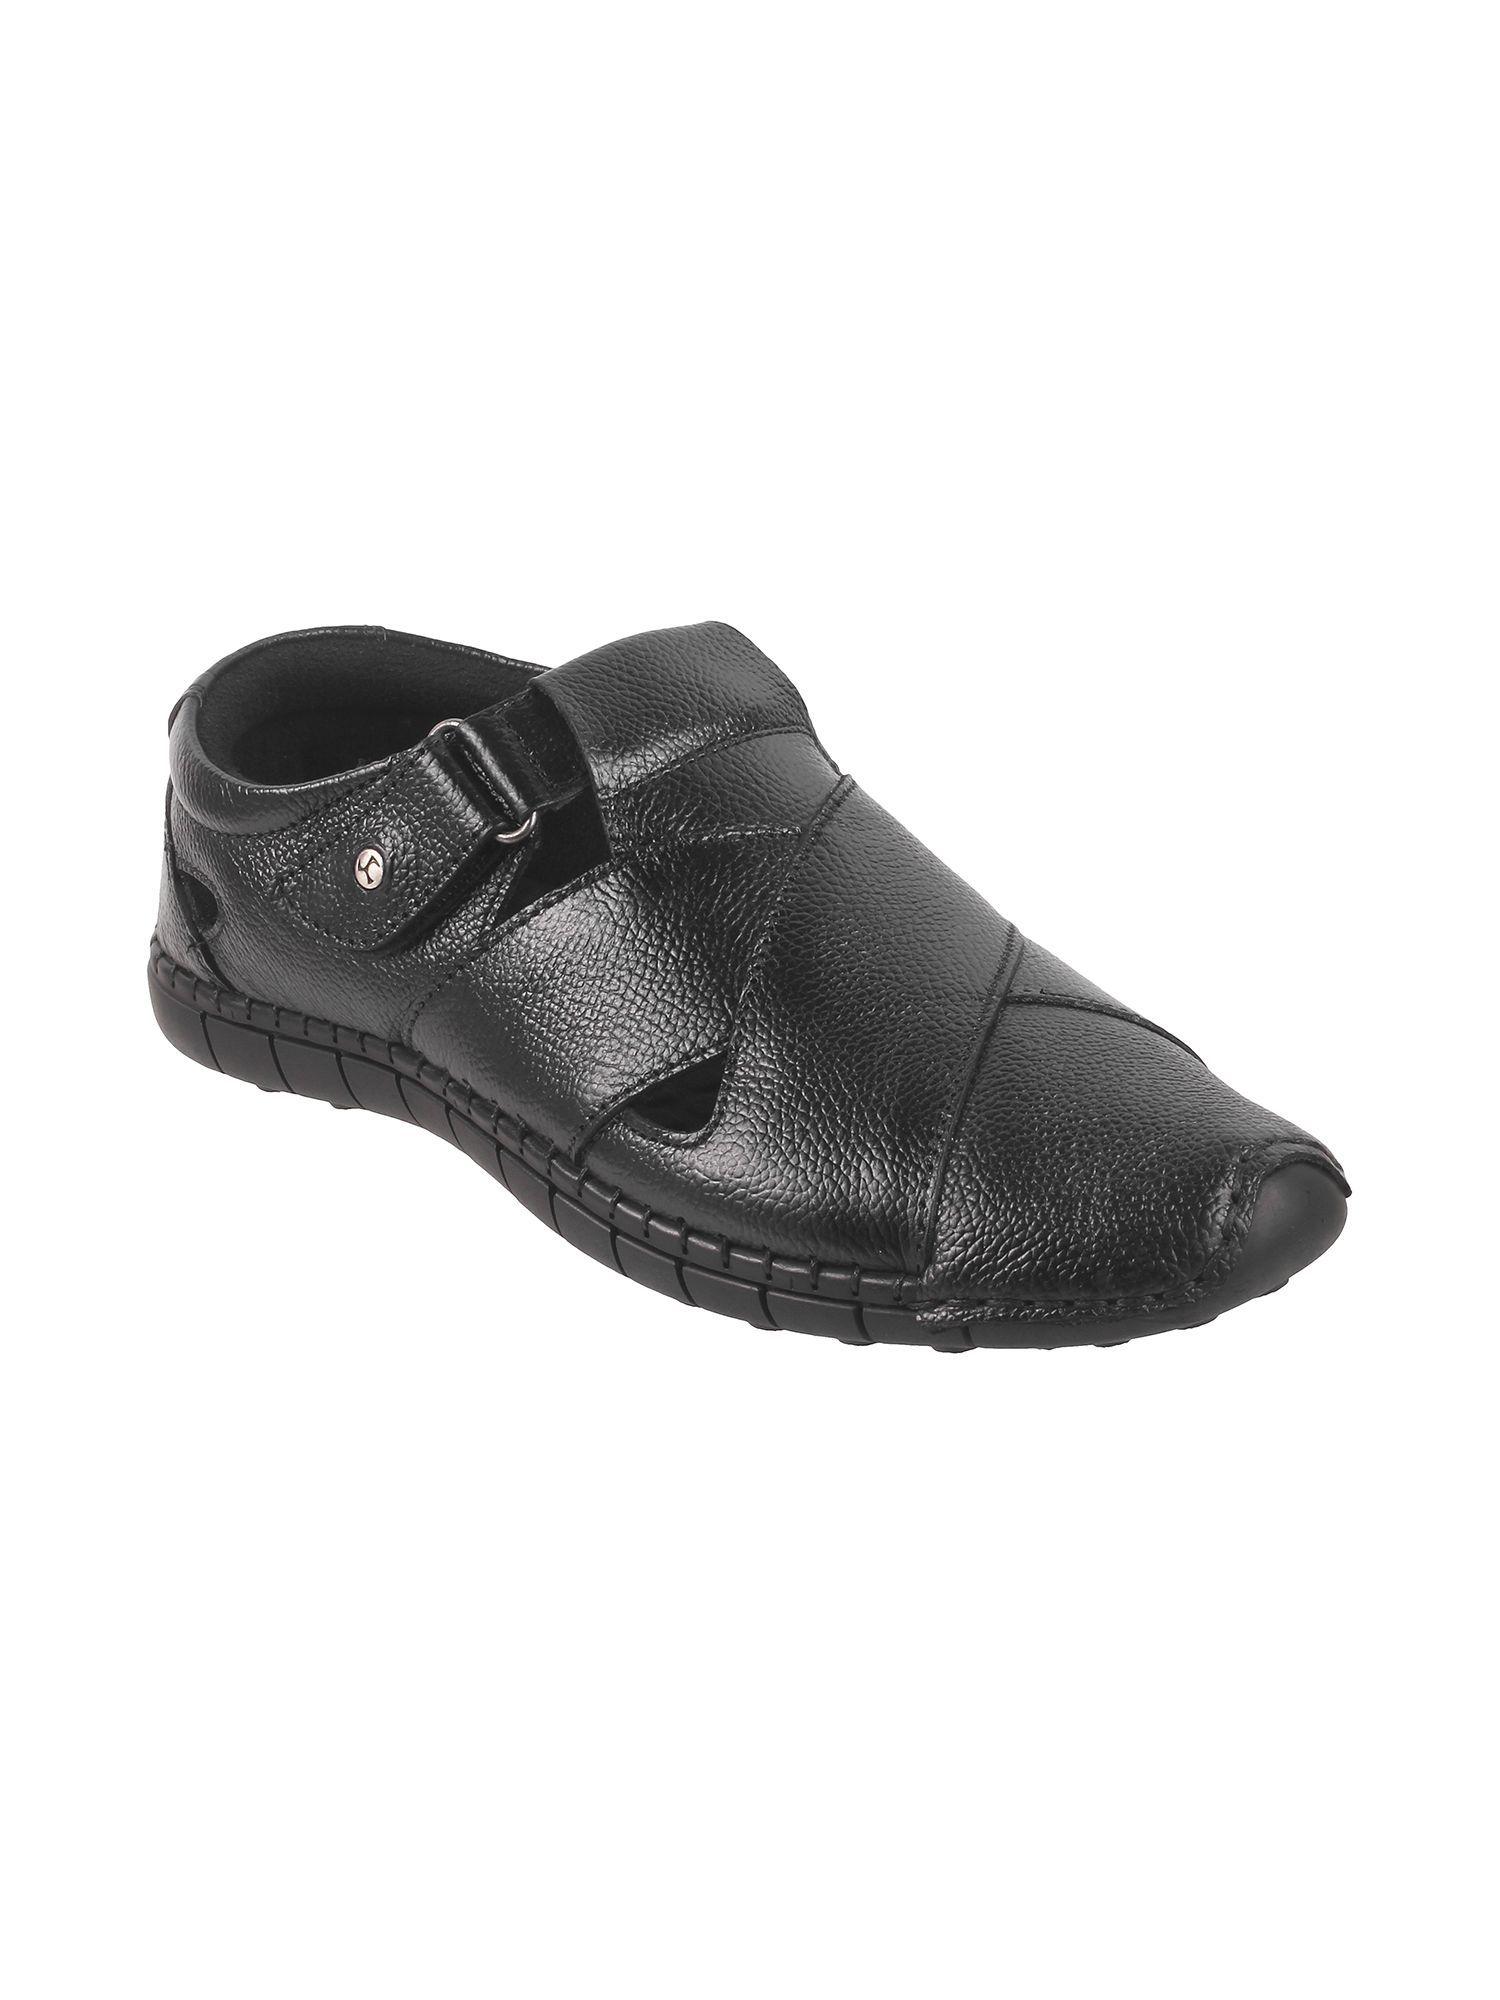 Men Casual Leather Black Sandals